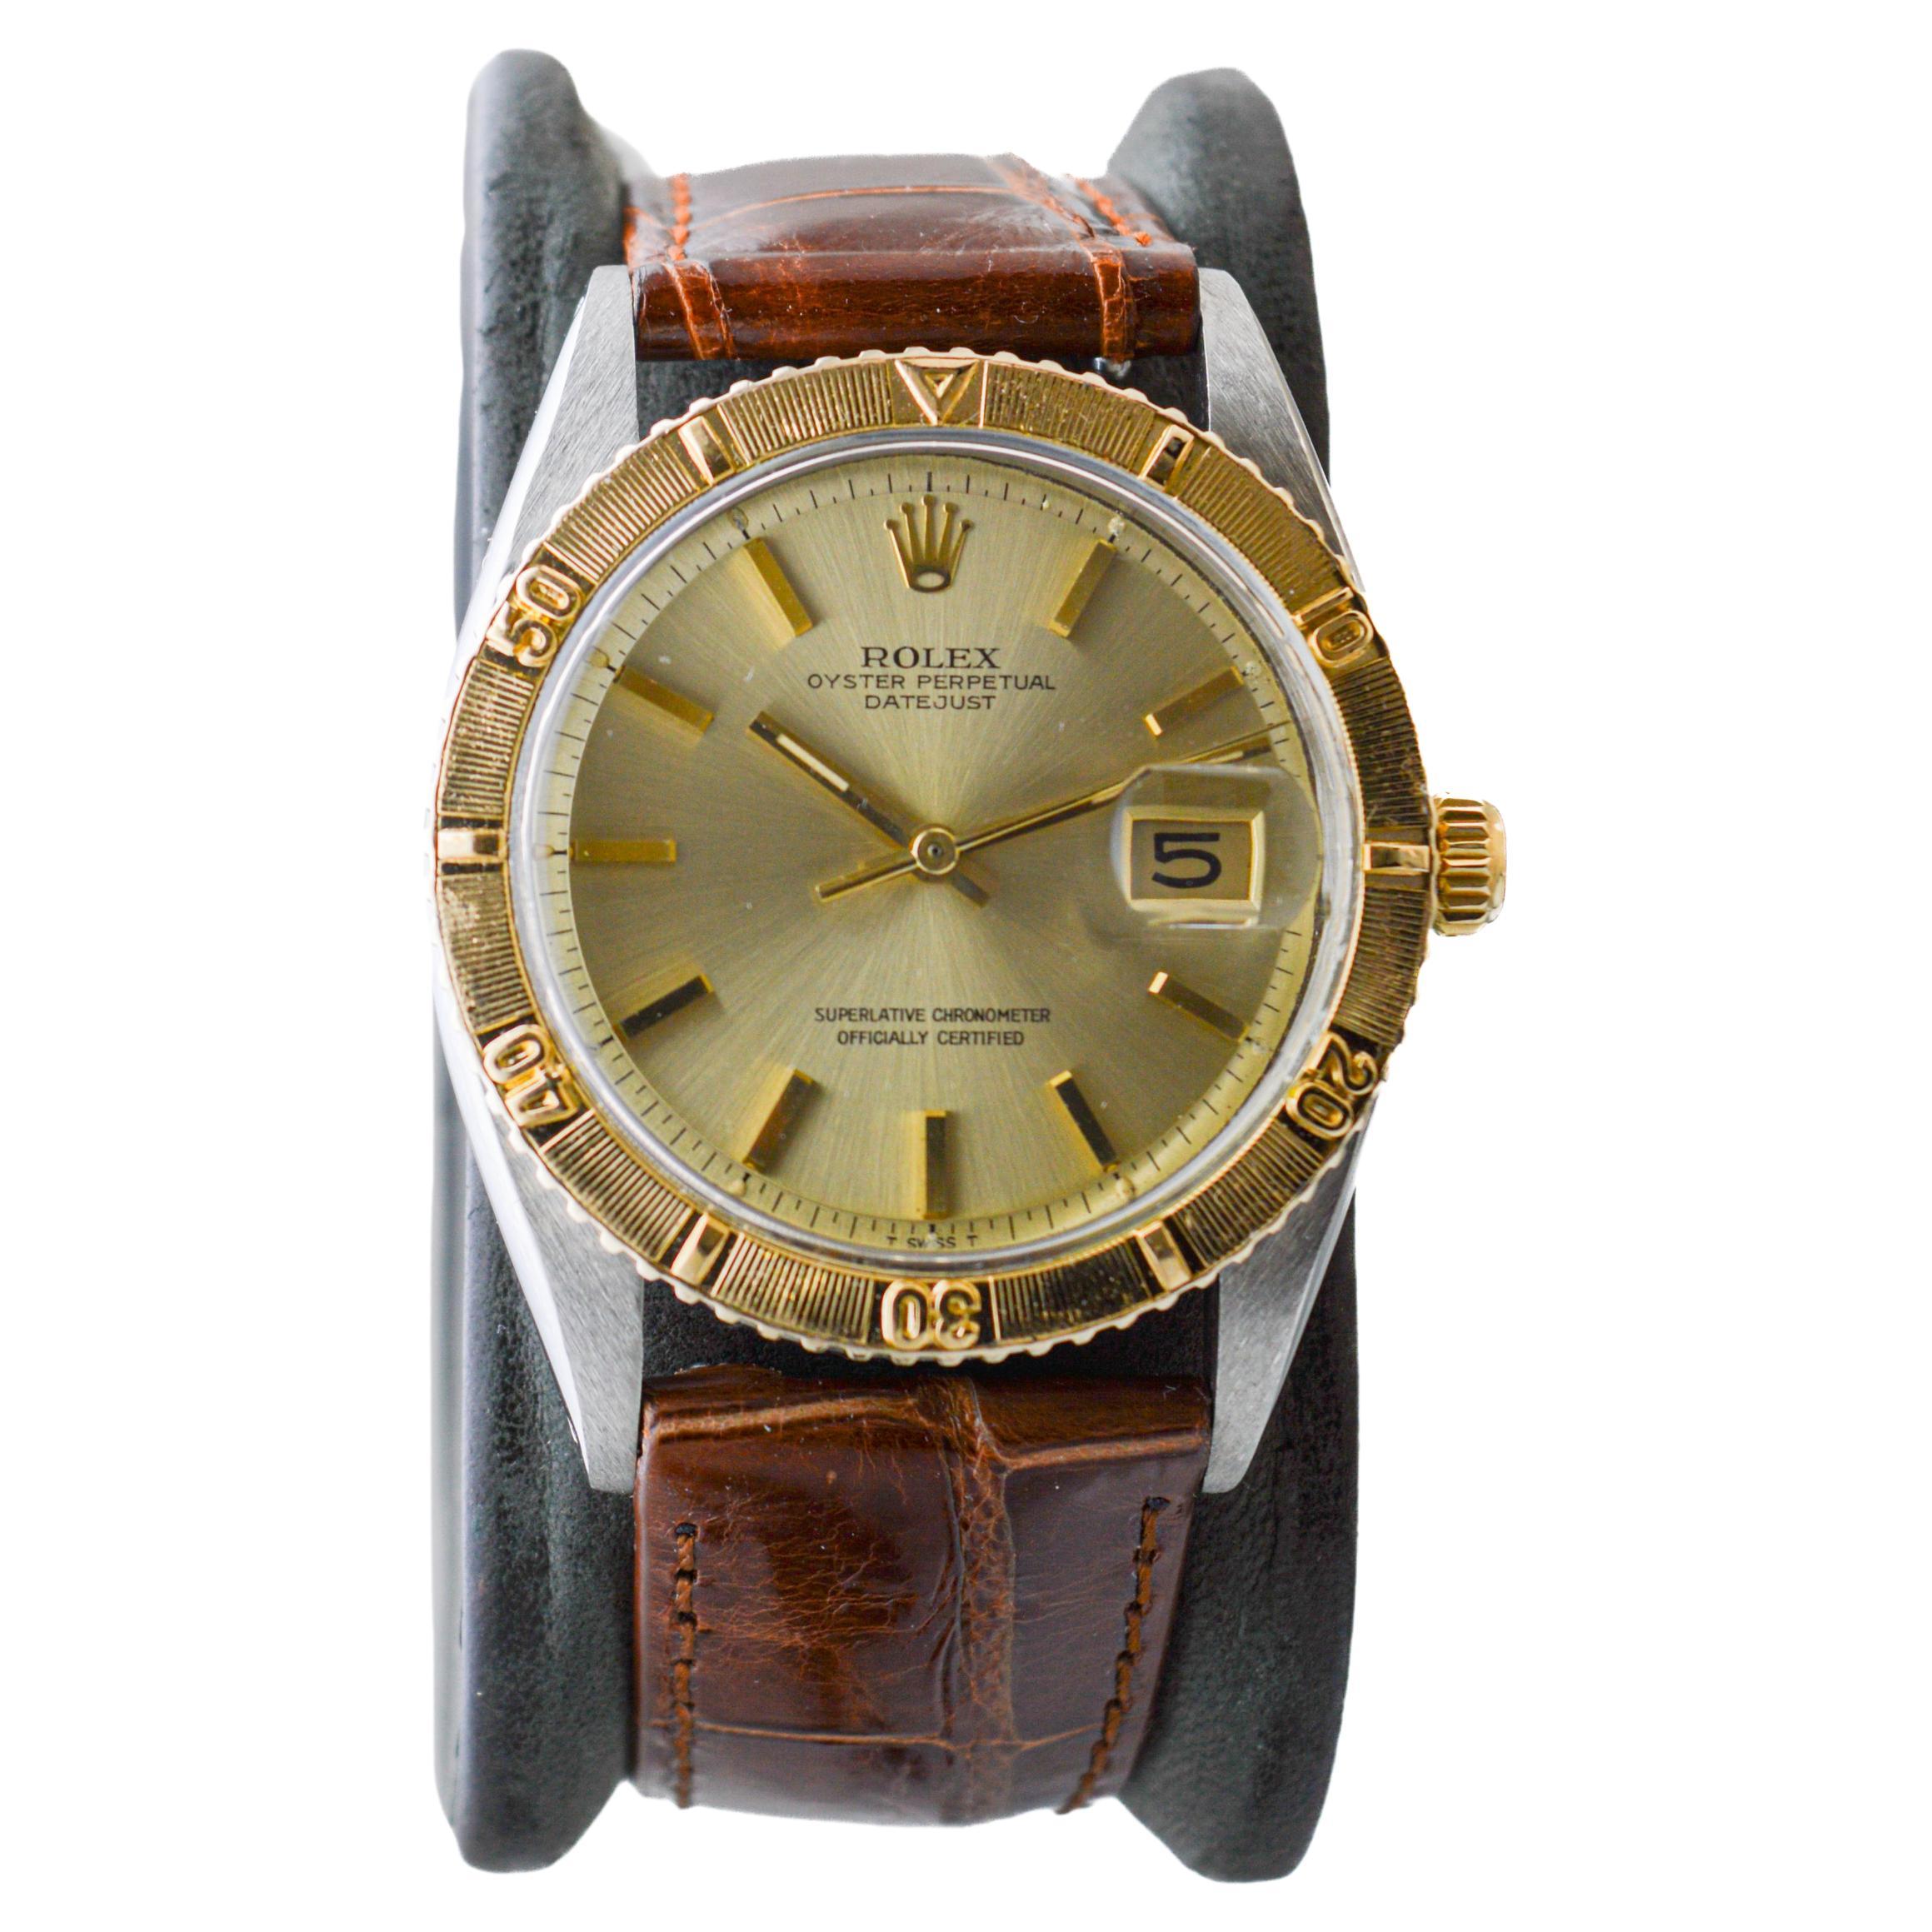 FABRIK / HAUS: Rolex Watch Company
STIL / REFERENZ: Oyster Perpetual Datejust 